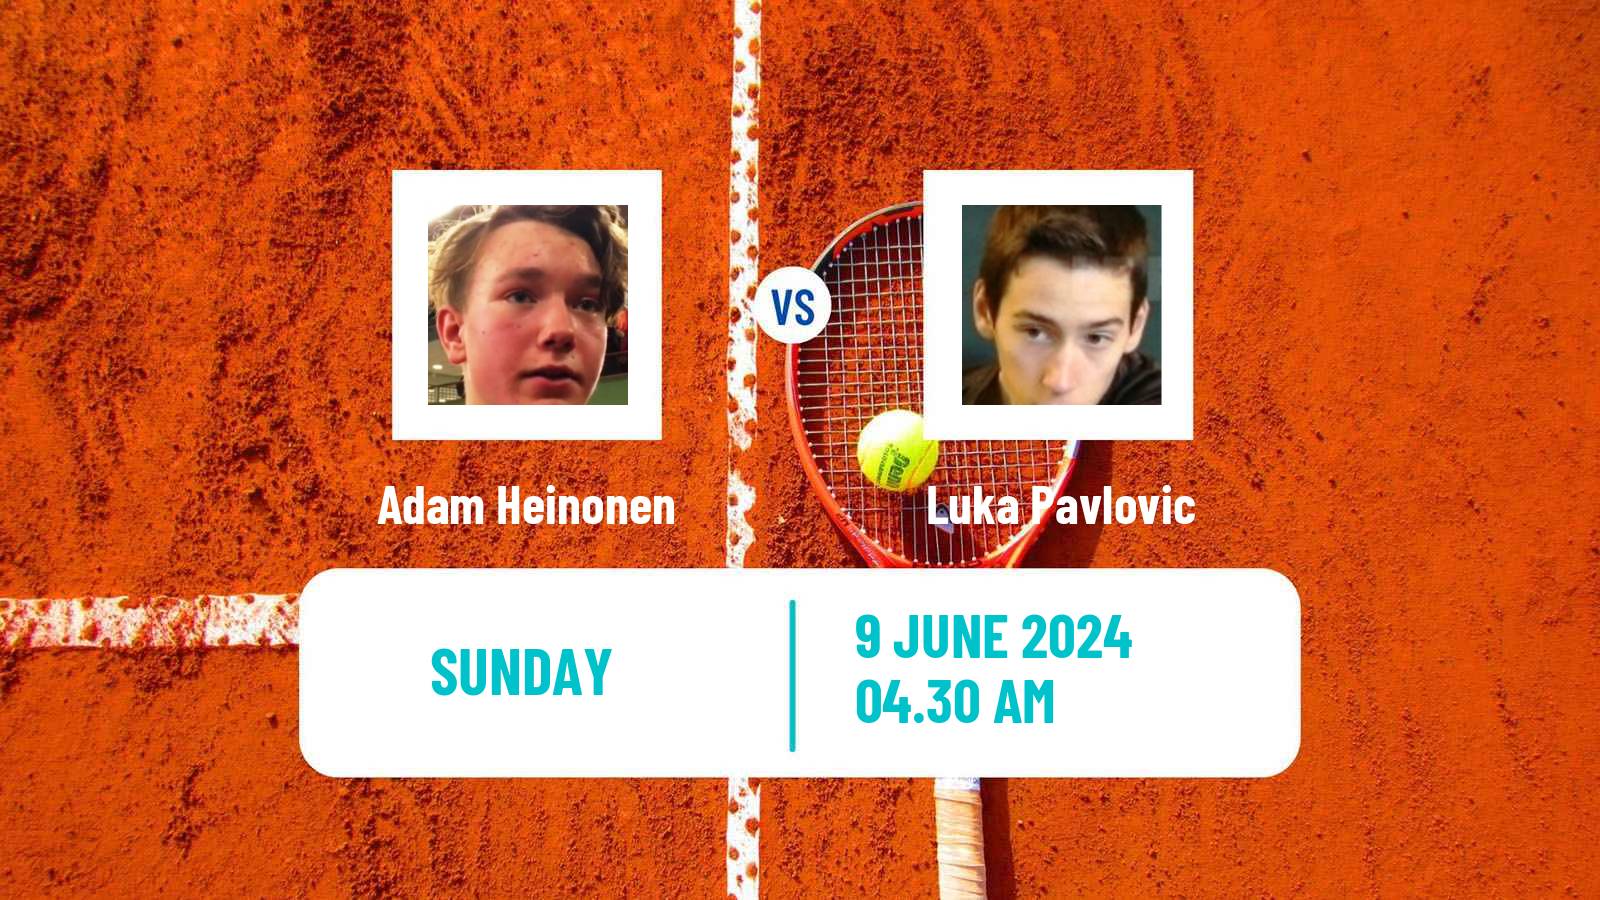 Tennis ITF M25 Kursumlijska Banja 2 Men Adam Heinonen - Luka Pavlovic